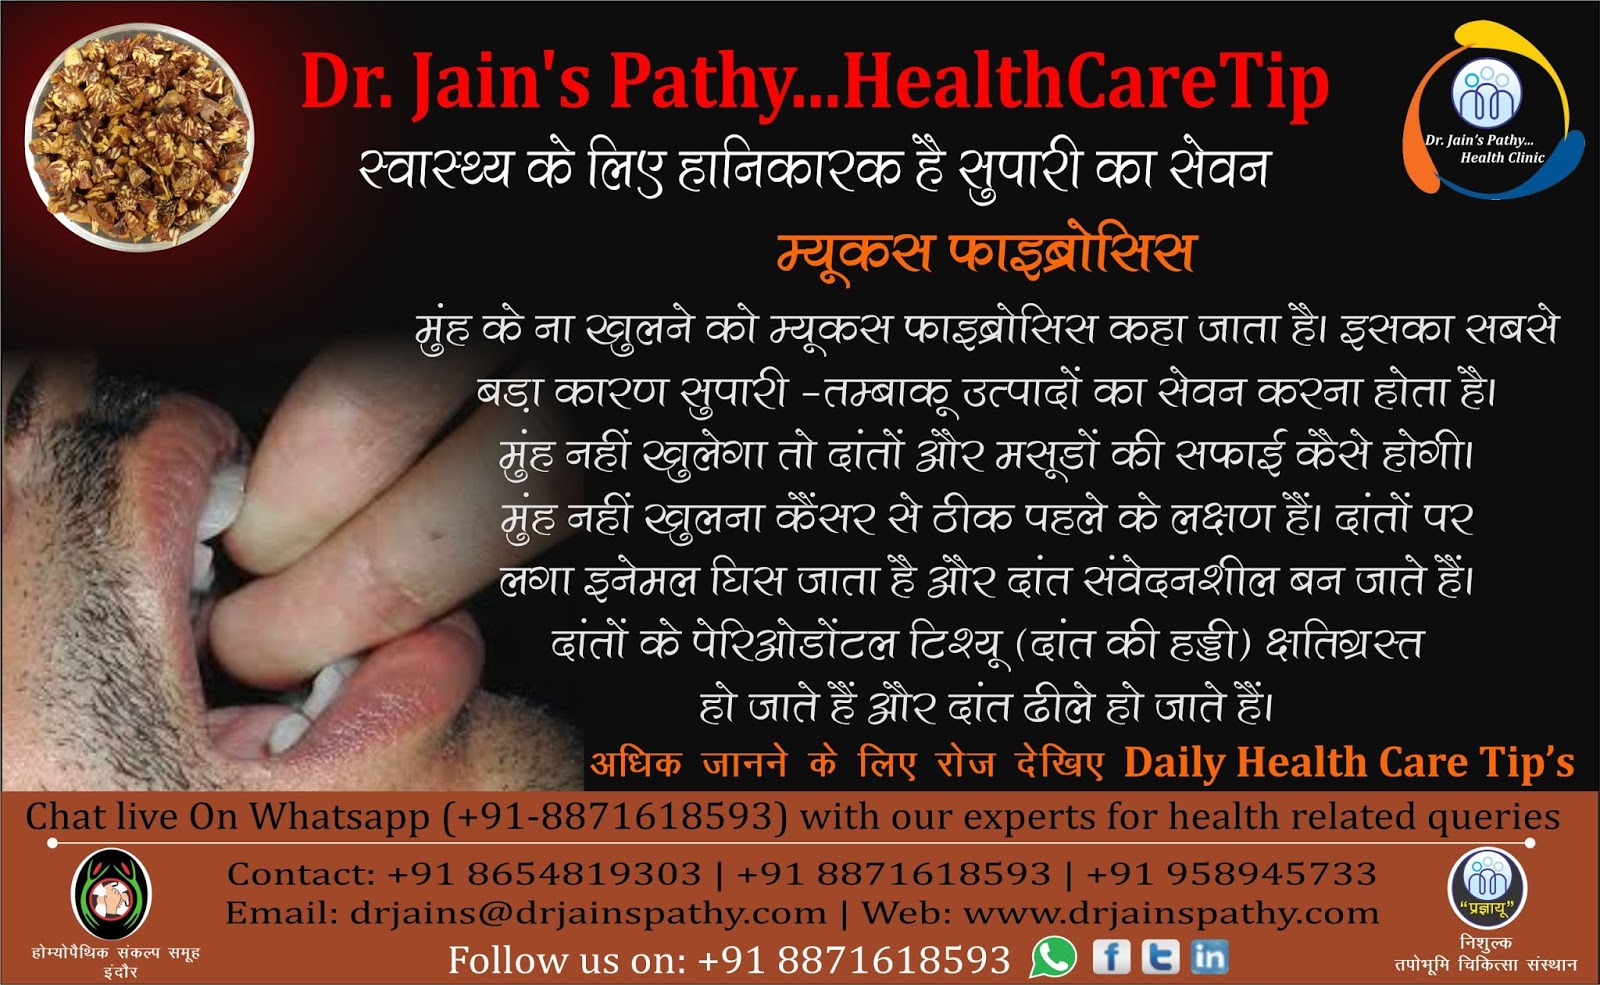 Dr. Jain's Pathy... Health Clinic Dr. Jain's Pathy